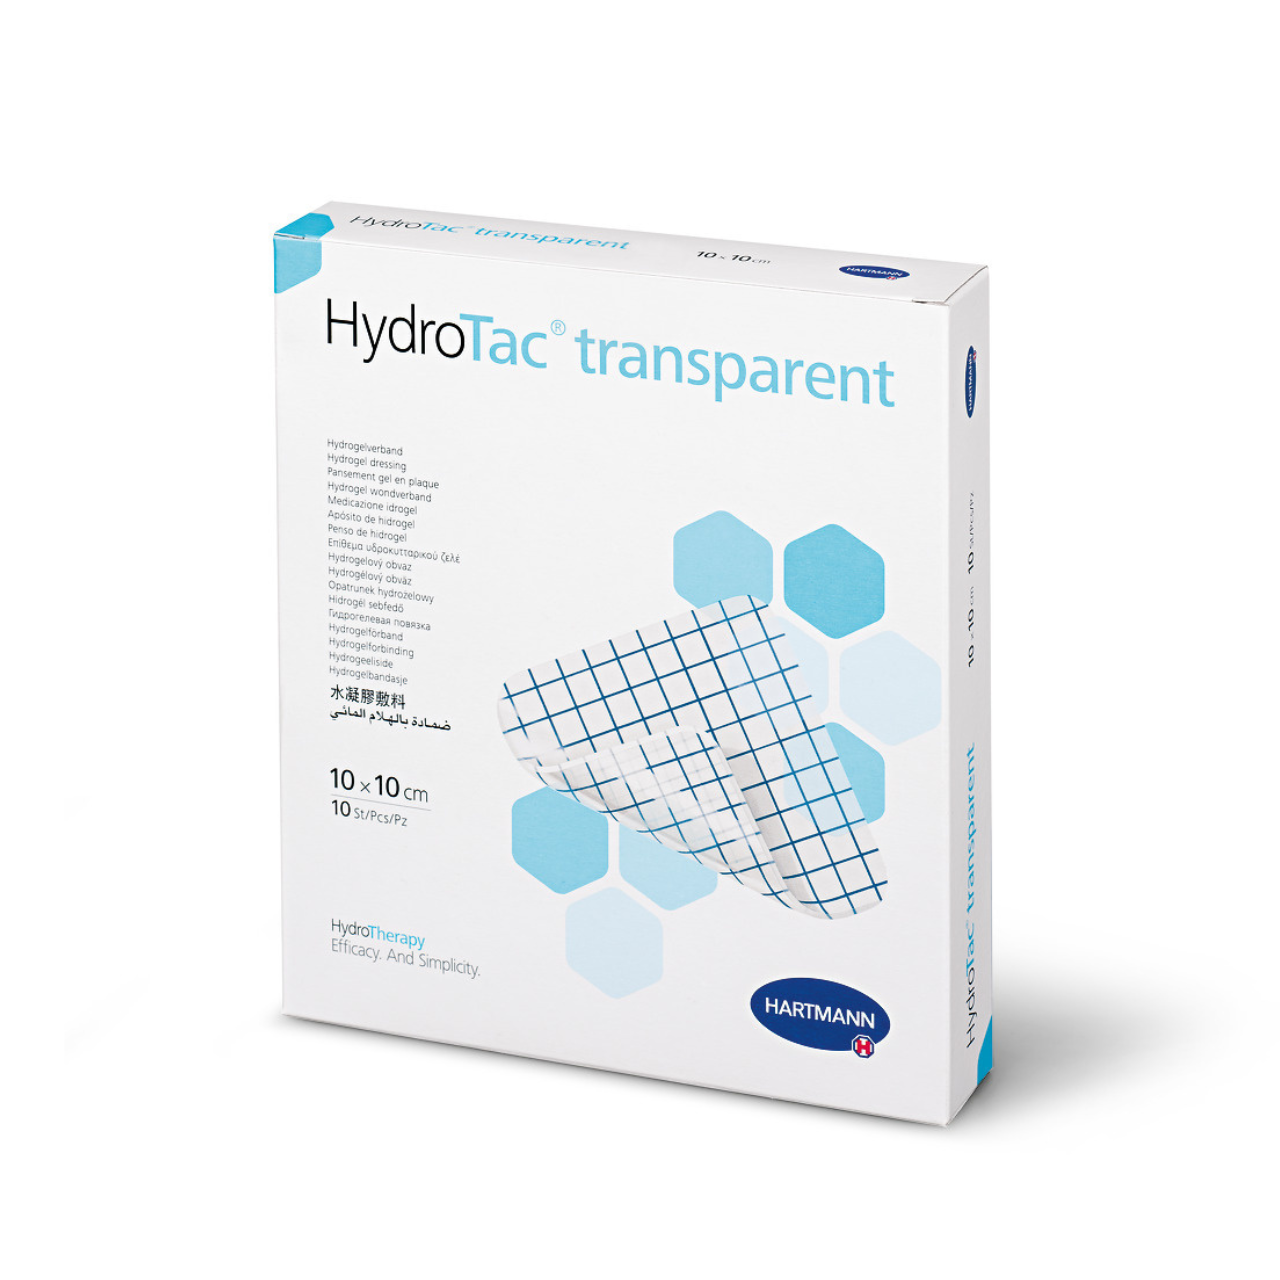 Hydrotac Transparent